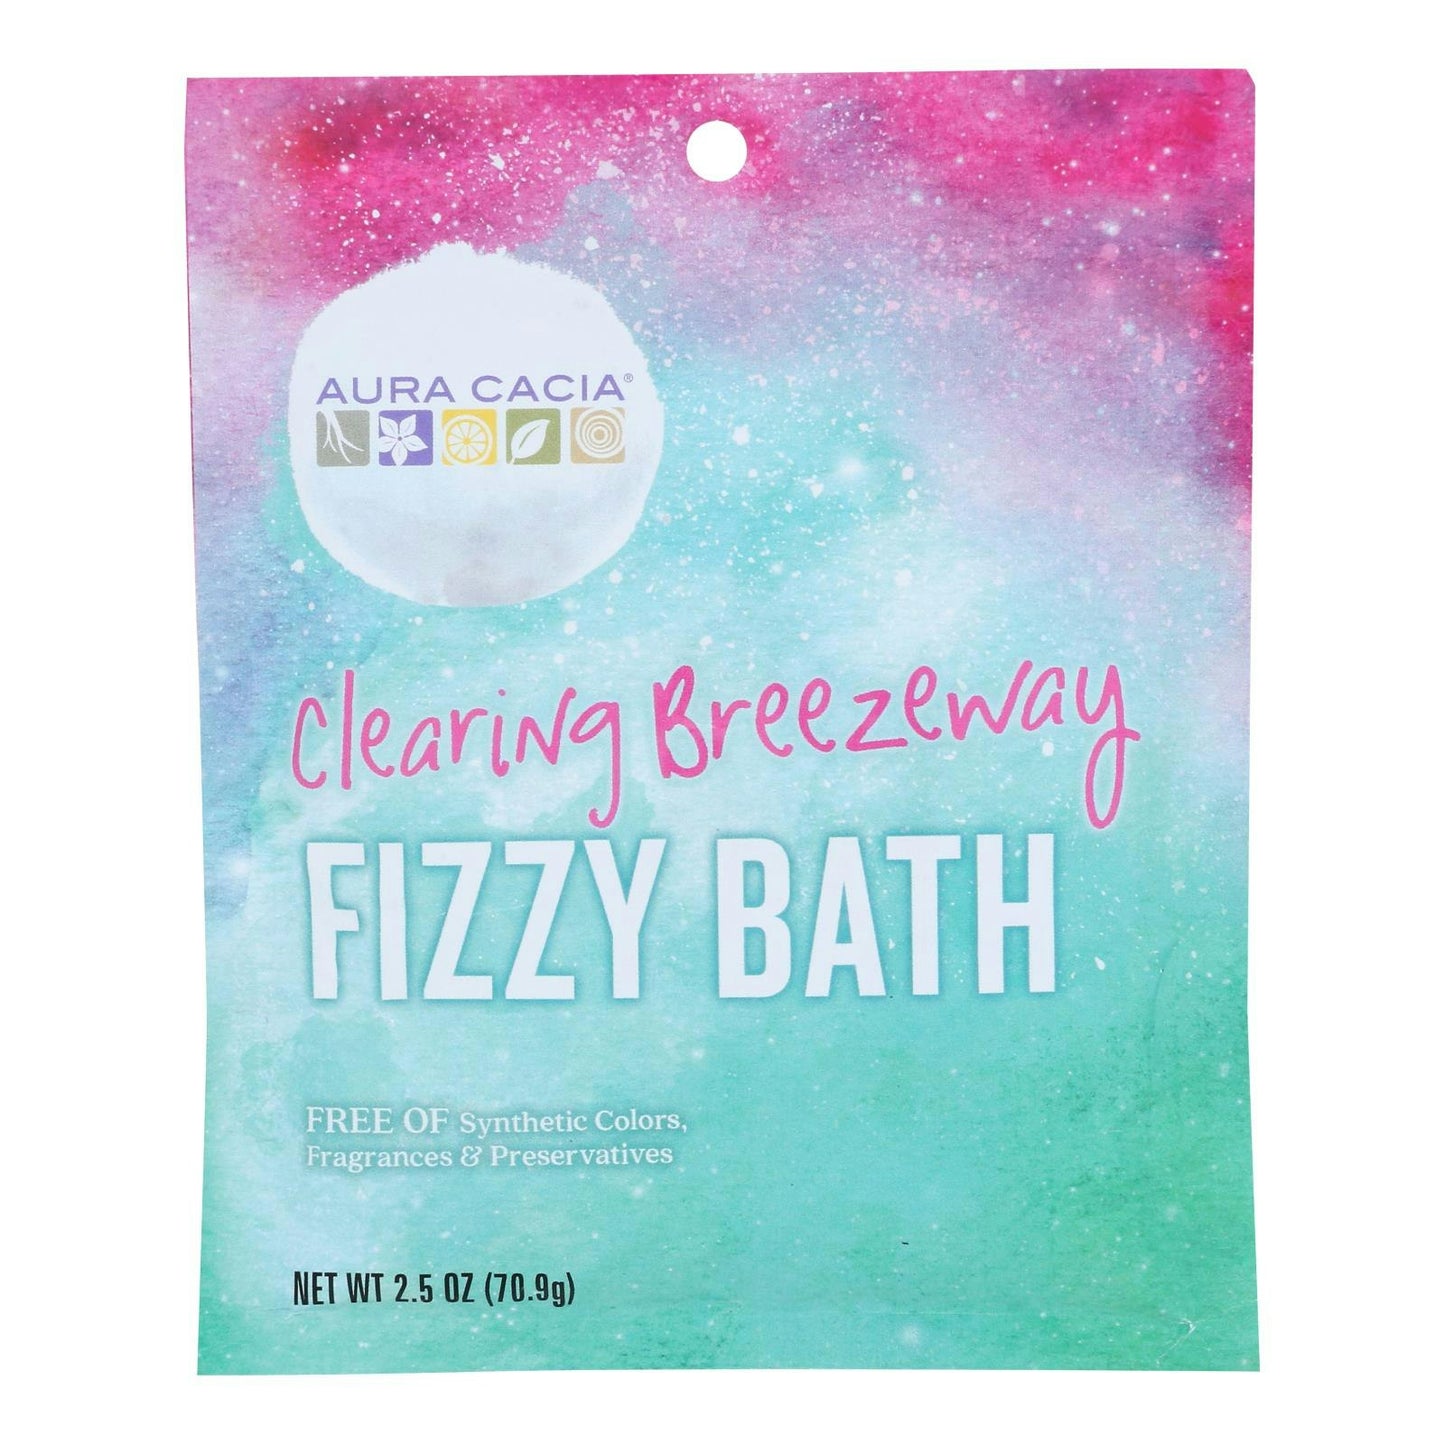 Aura Cacia - Fizz Bath Clear Breezwy 2.5 oz (Pack of 6)